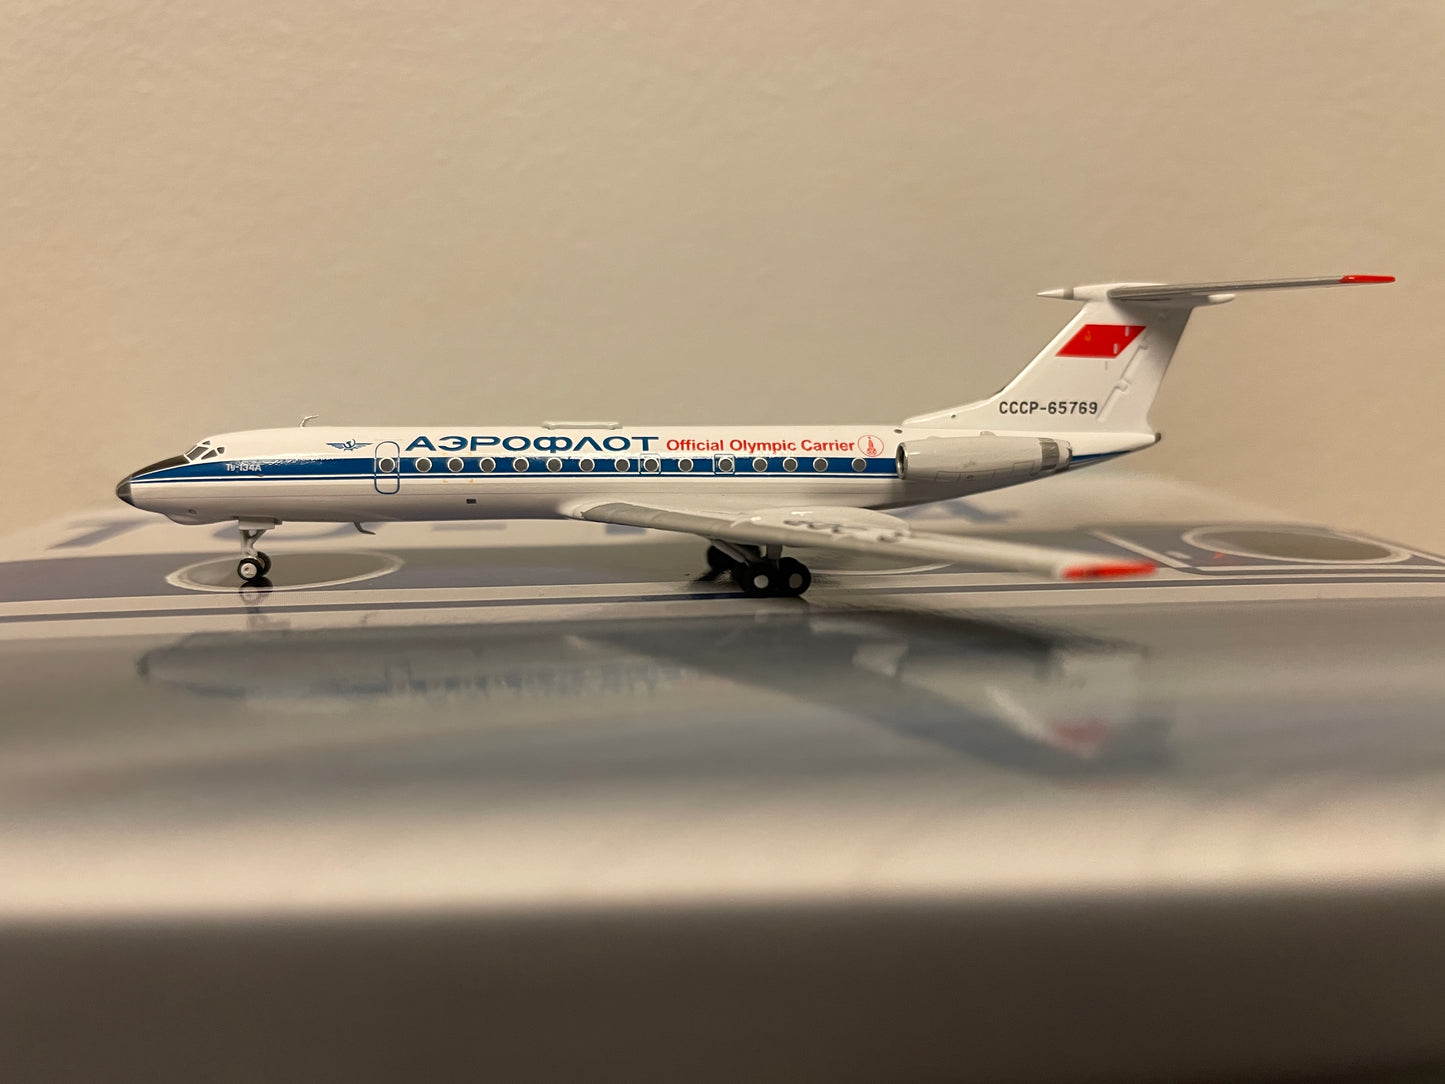 1:400 Panda Models Aeroflot Tupolev Tu-134 "Official Olympic Carrier" CCCP-65769 202109